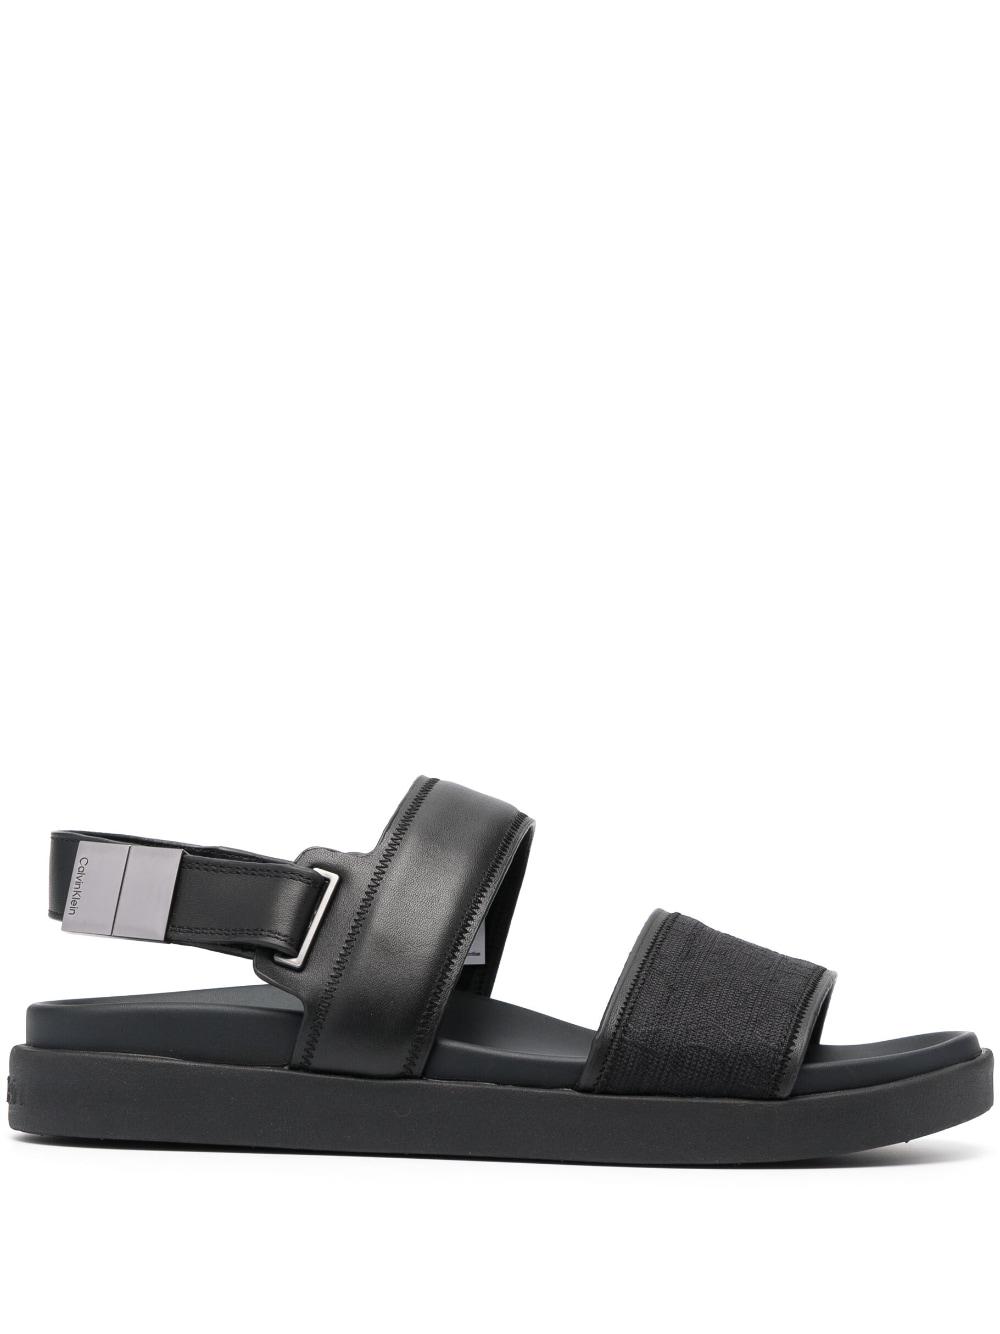 Calvin Klein Jacquard Leather Sandals in Black for Men | Lyst